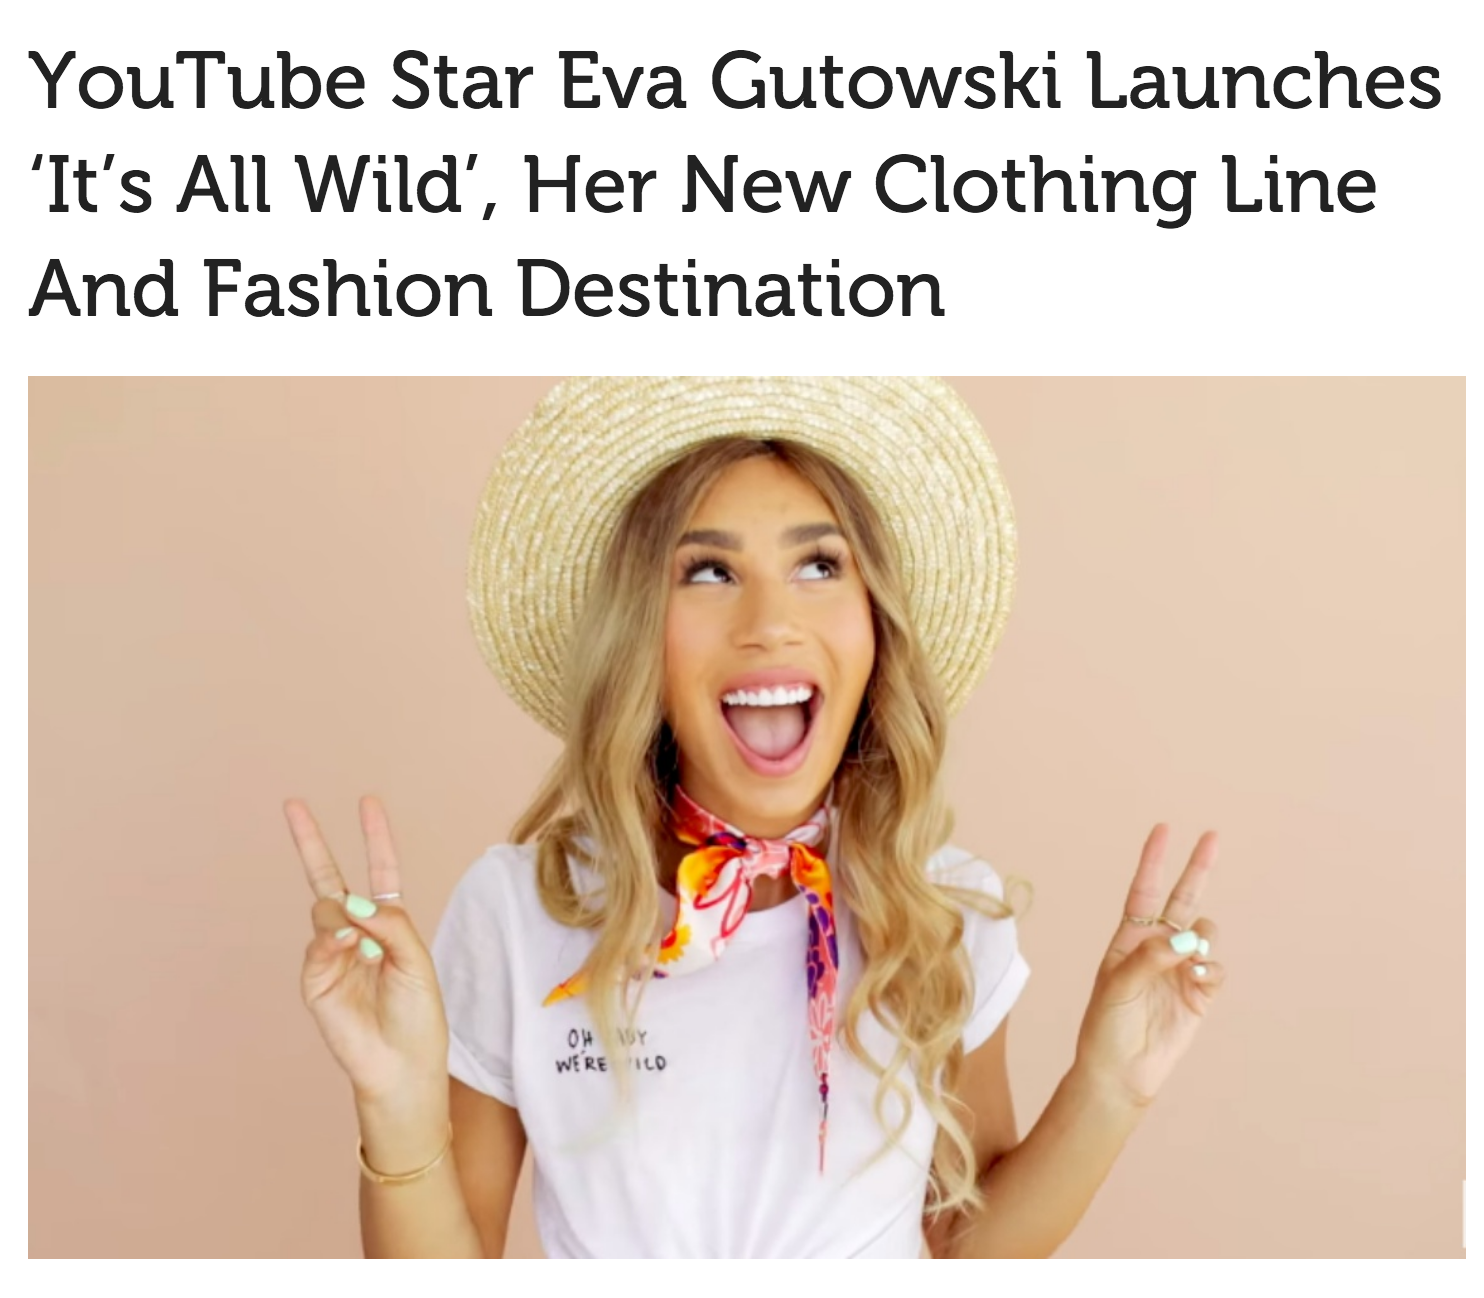 YouTube star Eva Gutowski Launches a Global Brand Adventure